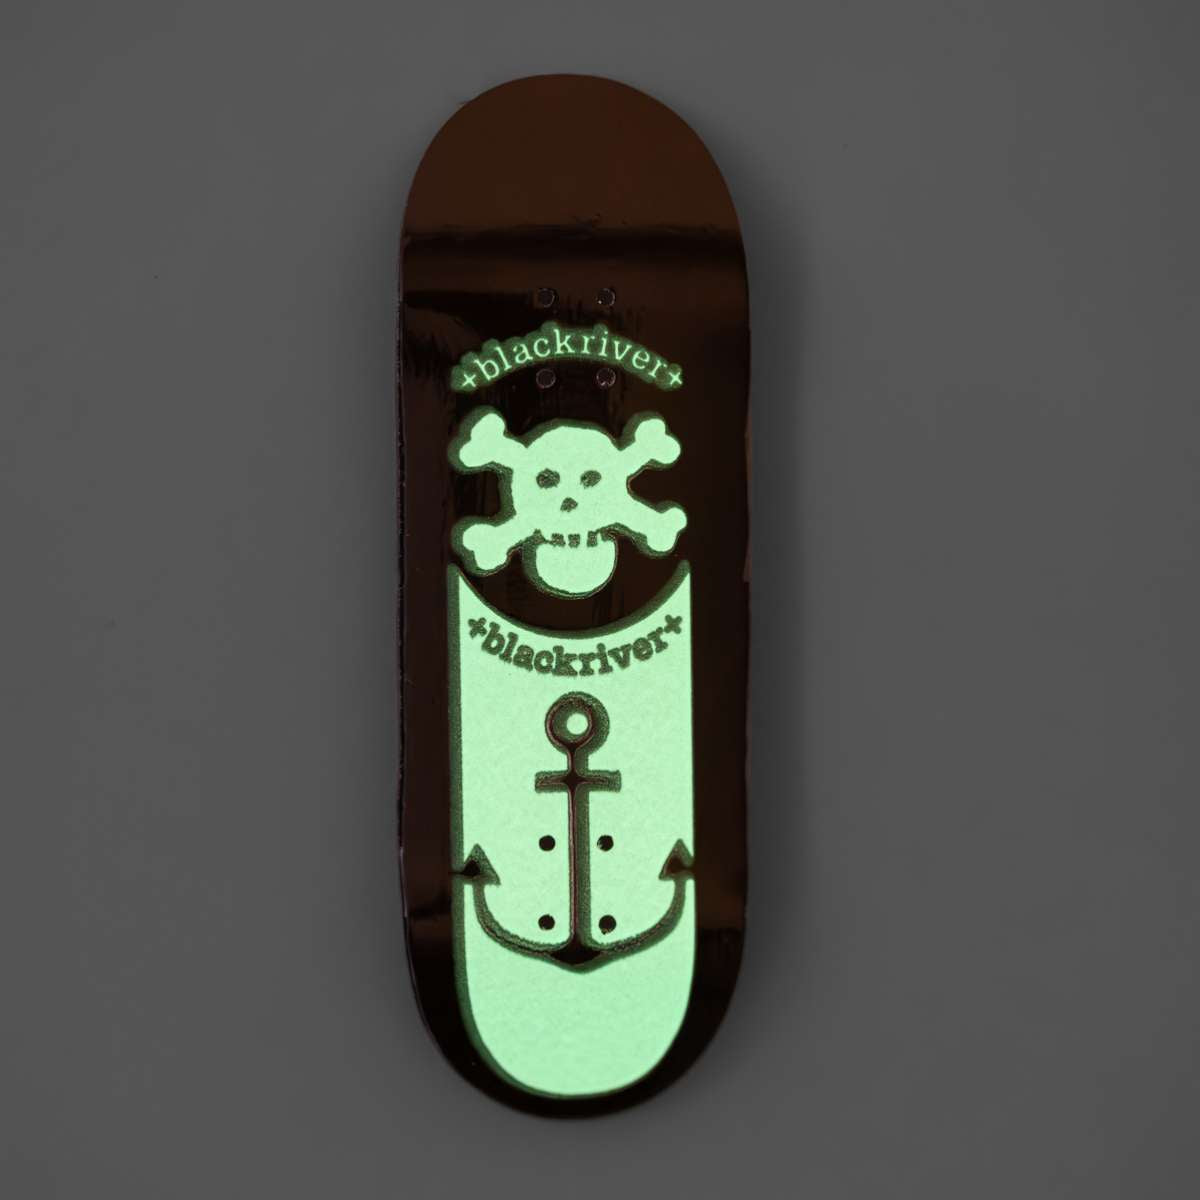 Blackriver Fingerboard "Anchor" glow in the dark Set 33mm